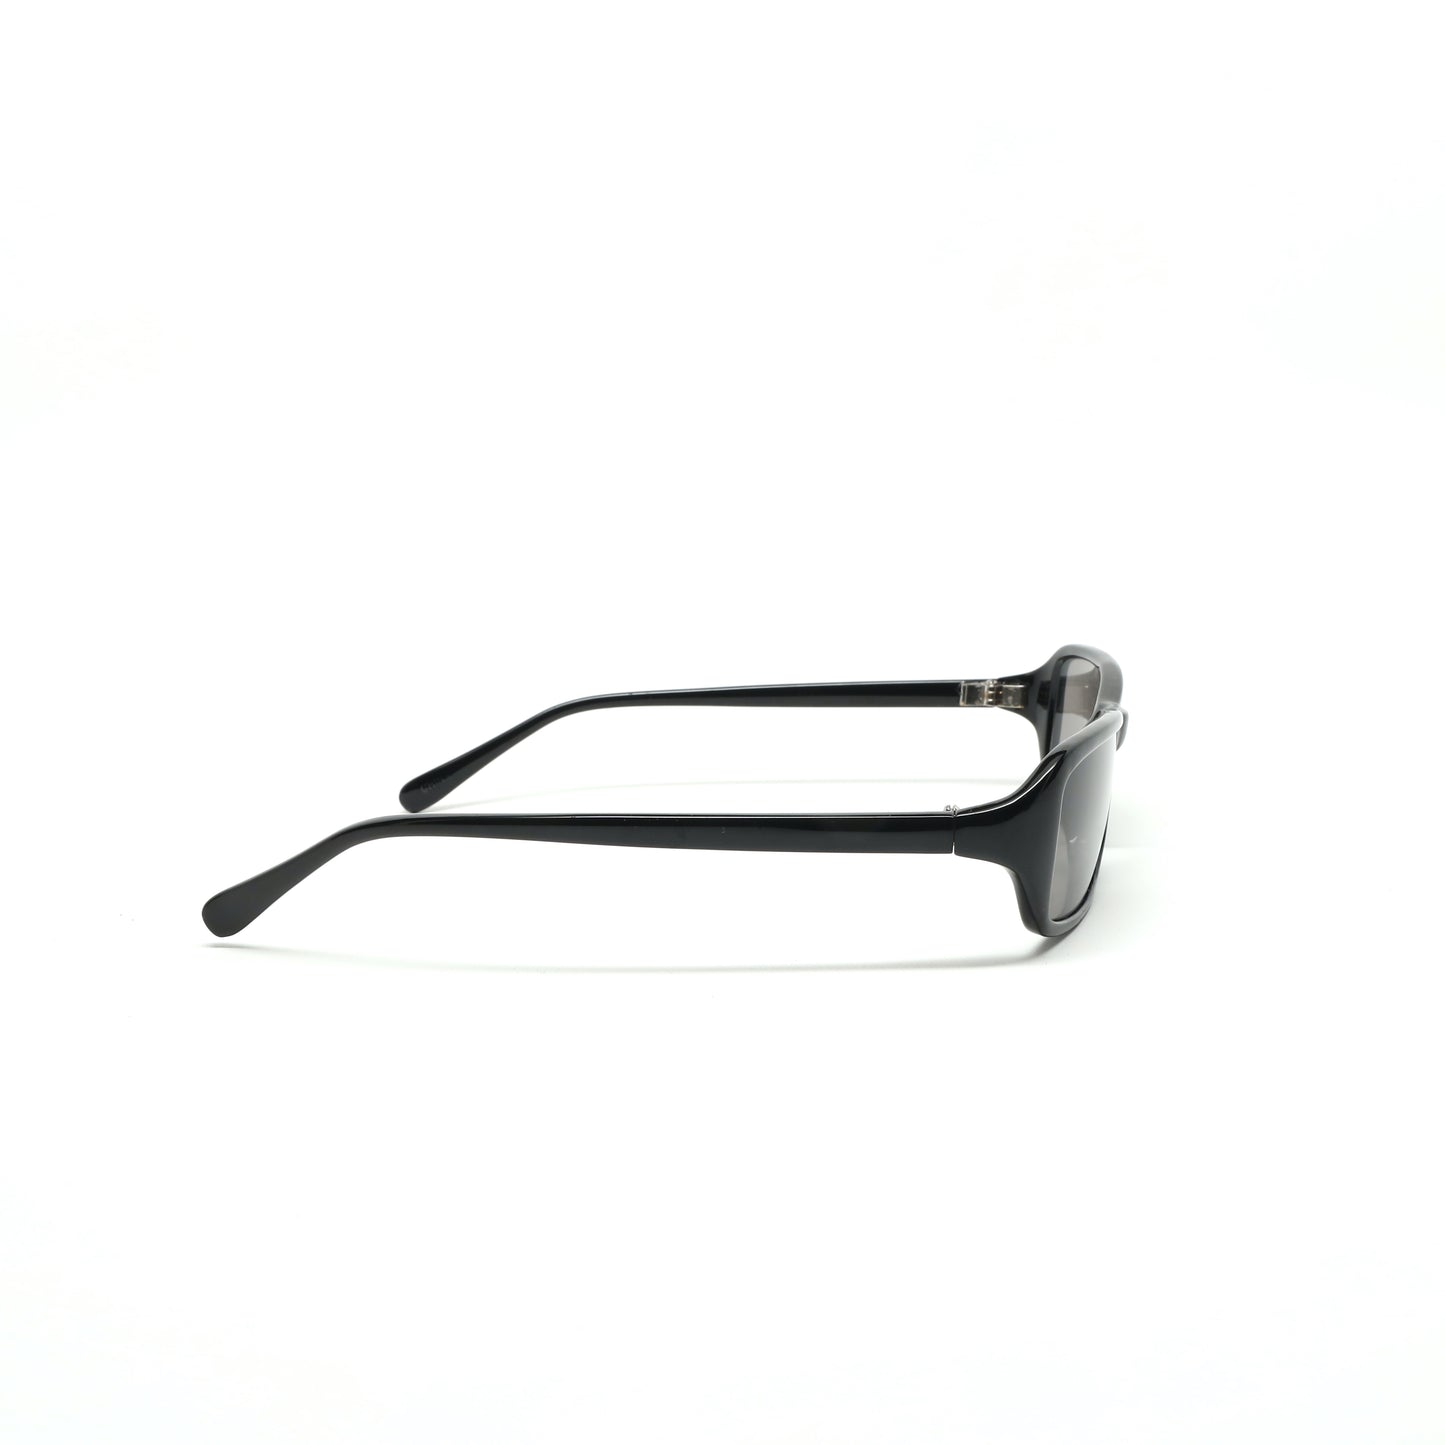 Deluxe Vintage 90s Rectangle Frame Sunglasses - Black